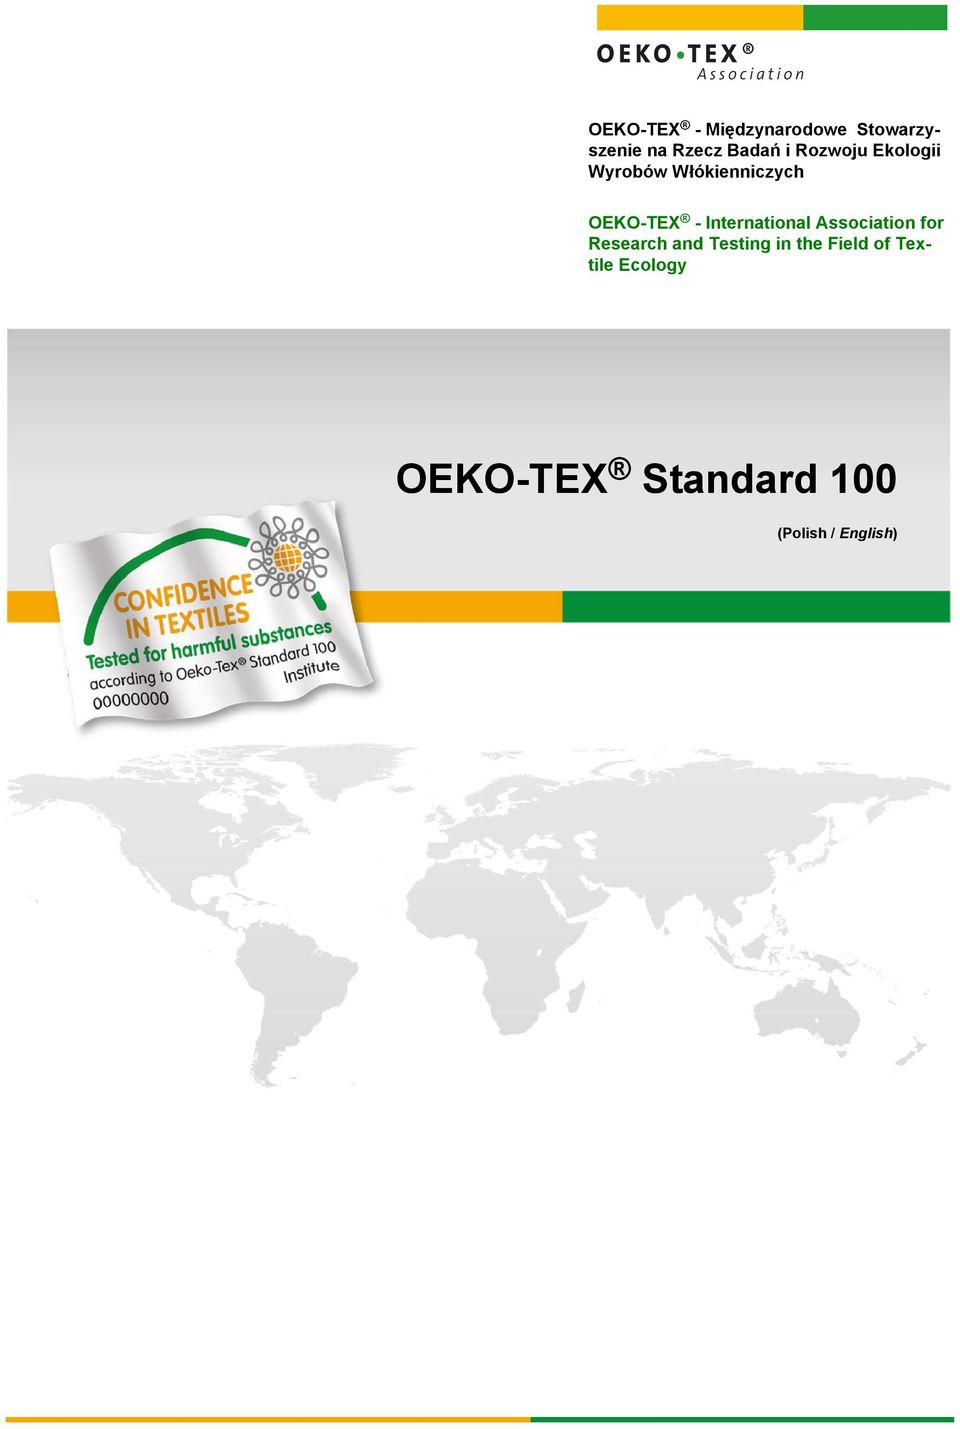 OEKO-TEX - International Association for Research